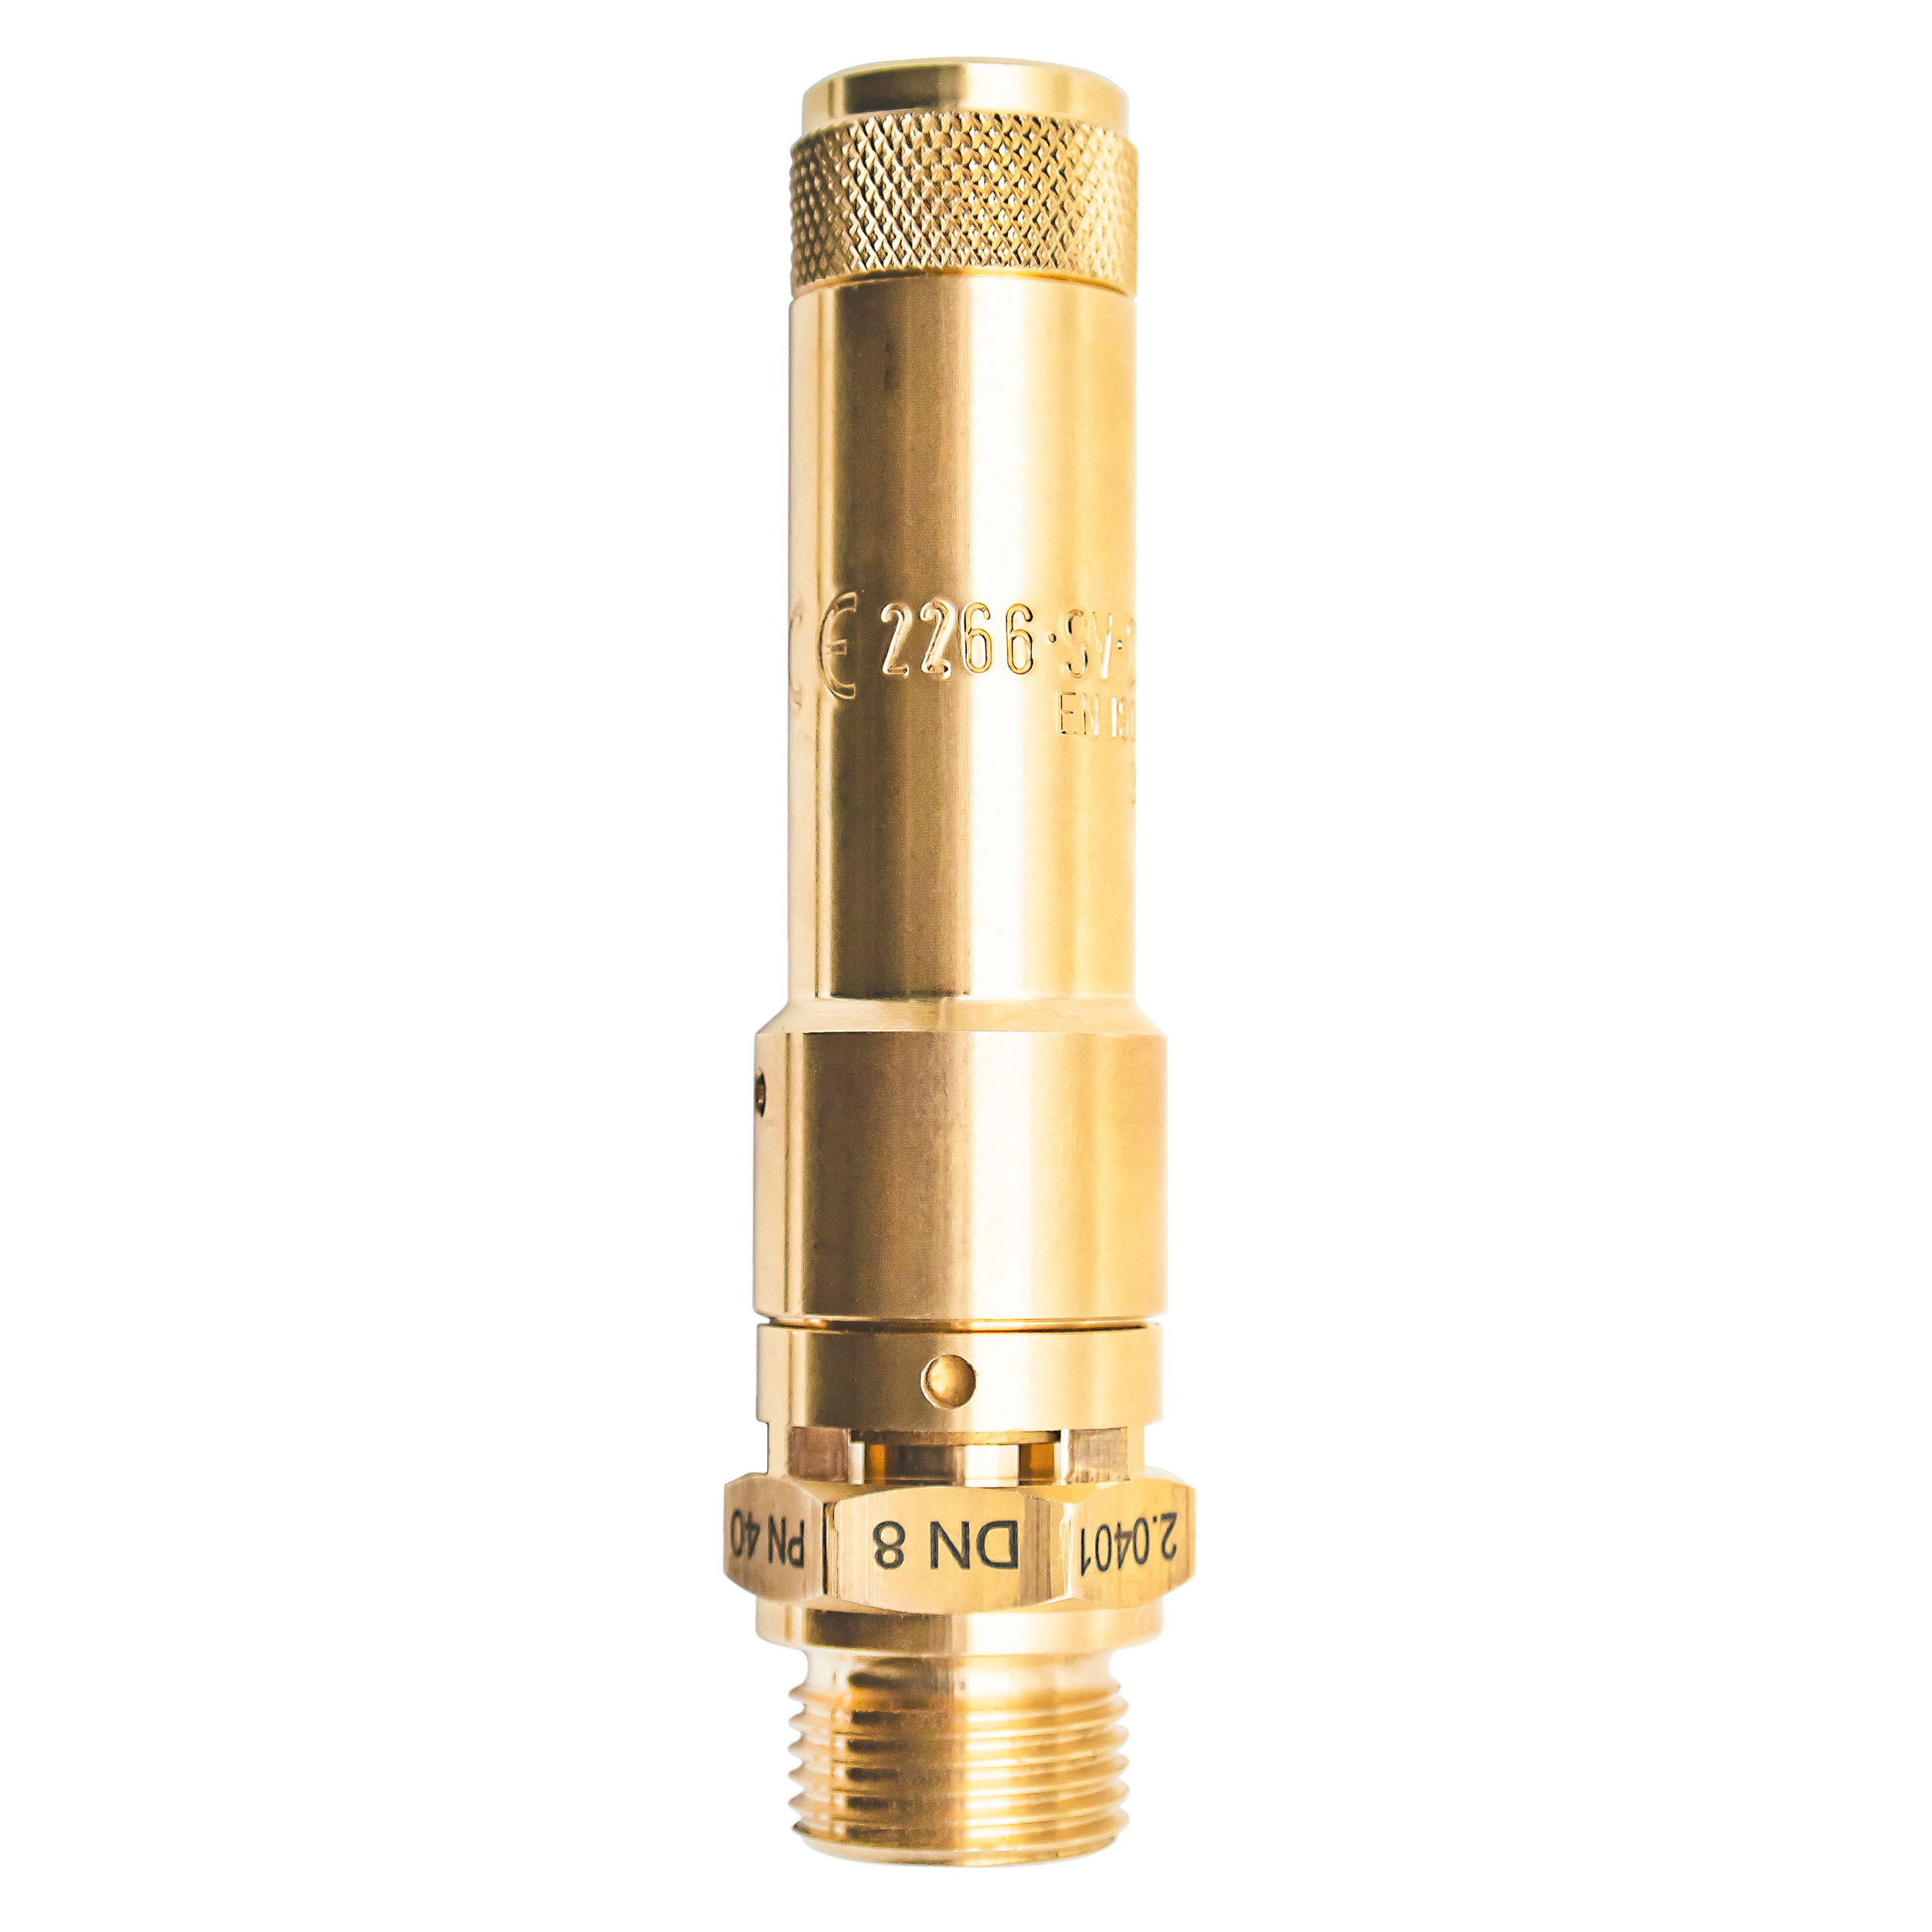 Component-tested safety valve DN 8, G⅜, pressure: 7.1-9 bar